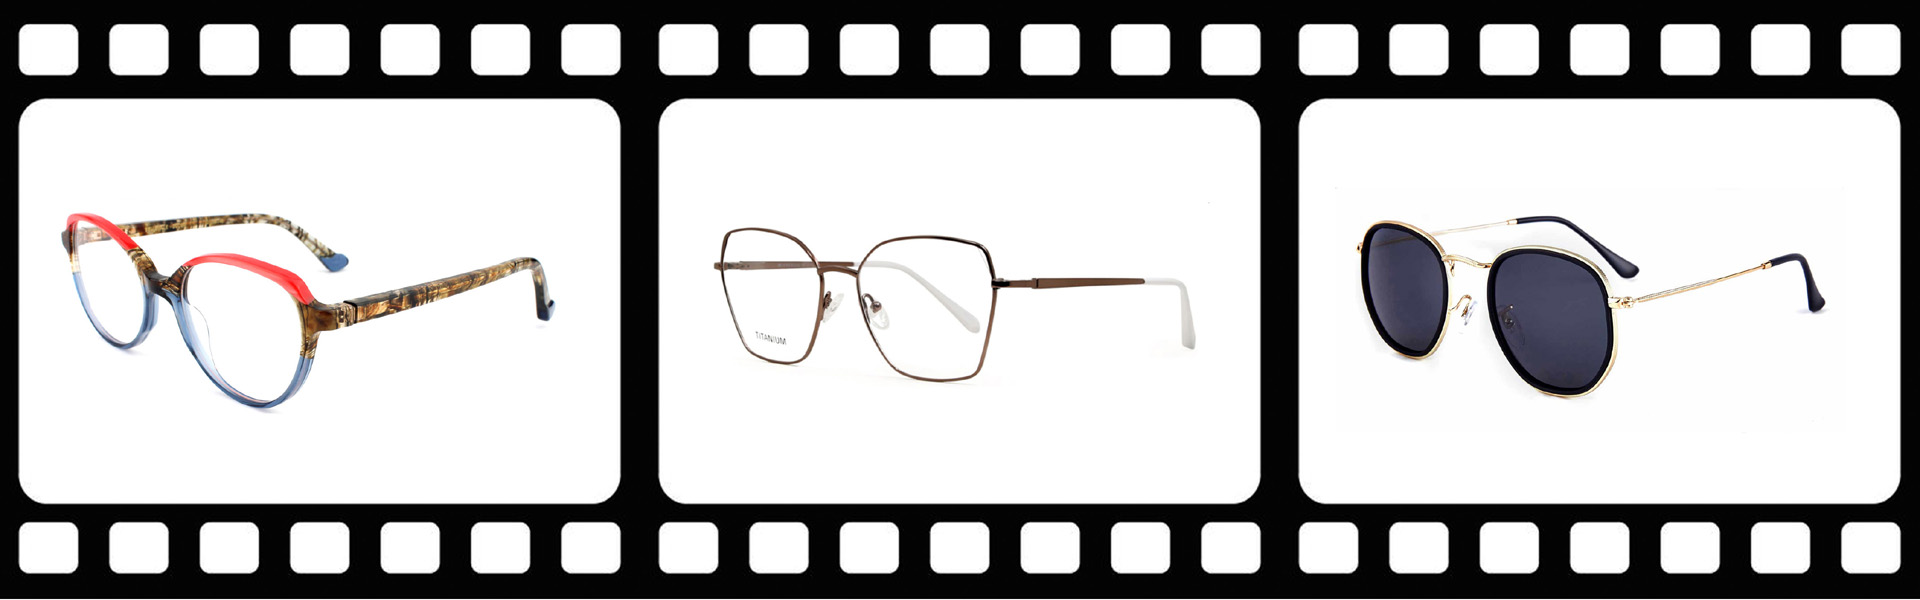 готови очила за очи, очила, готови очила,Wenzhou Ruite Optics Co.,Ltd